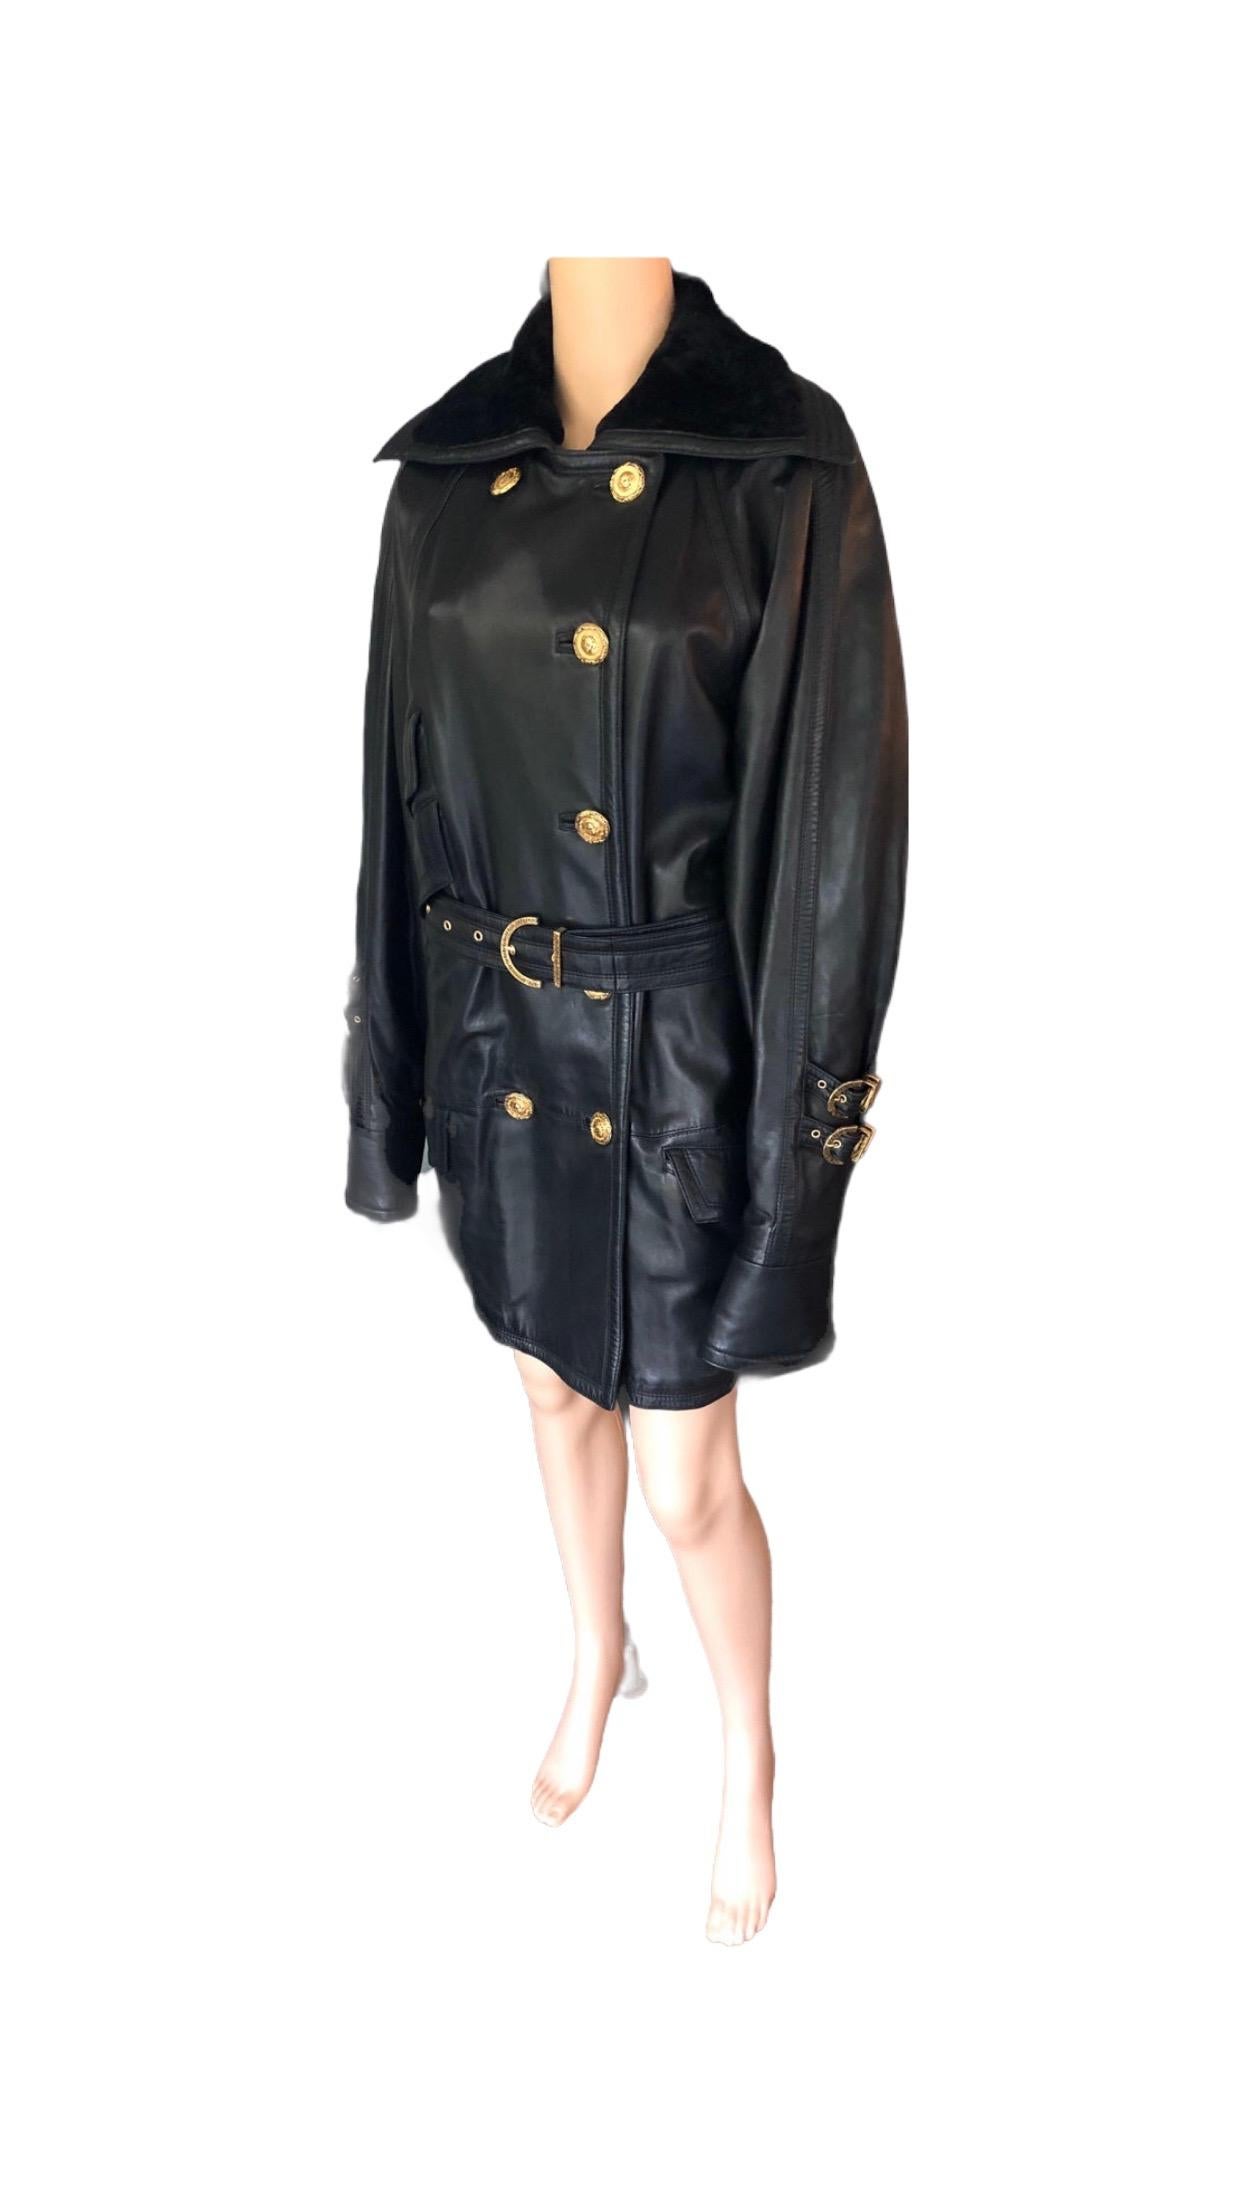 Gianni Versace c. 1990 Bondage Leather Belted Knee-Length Black Jacket Coat For Sale 6